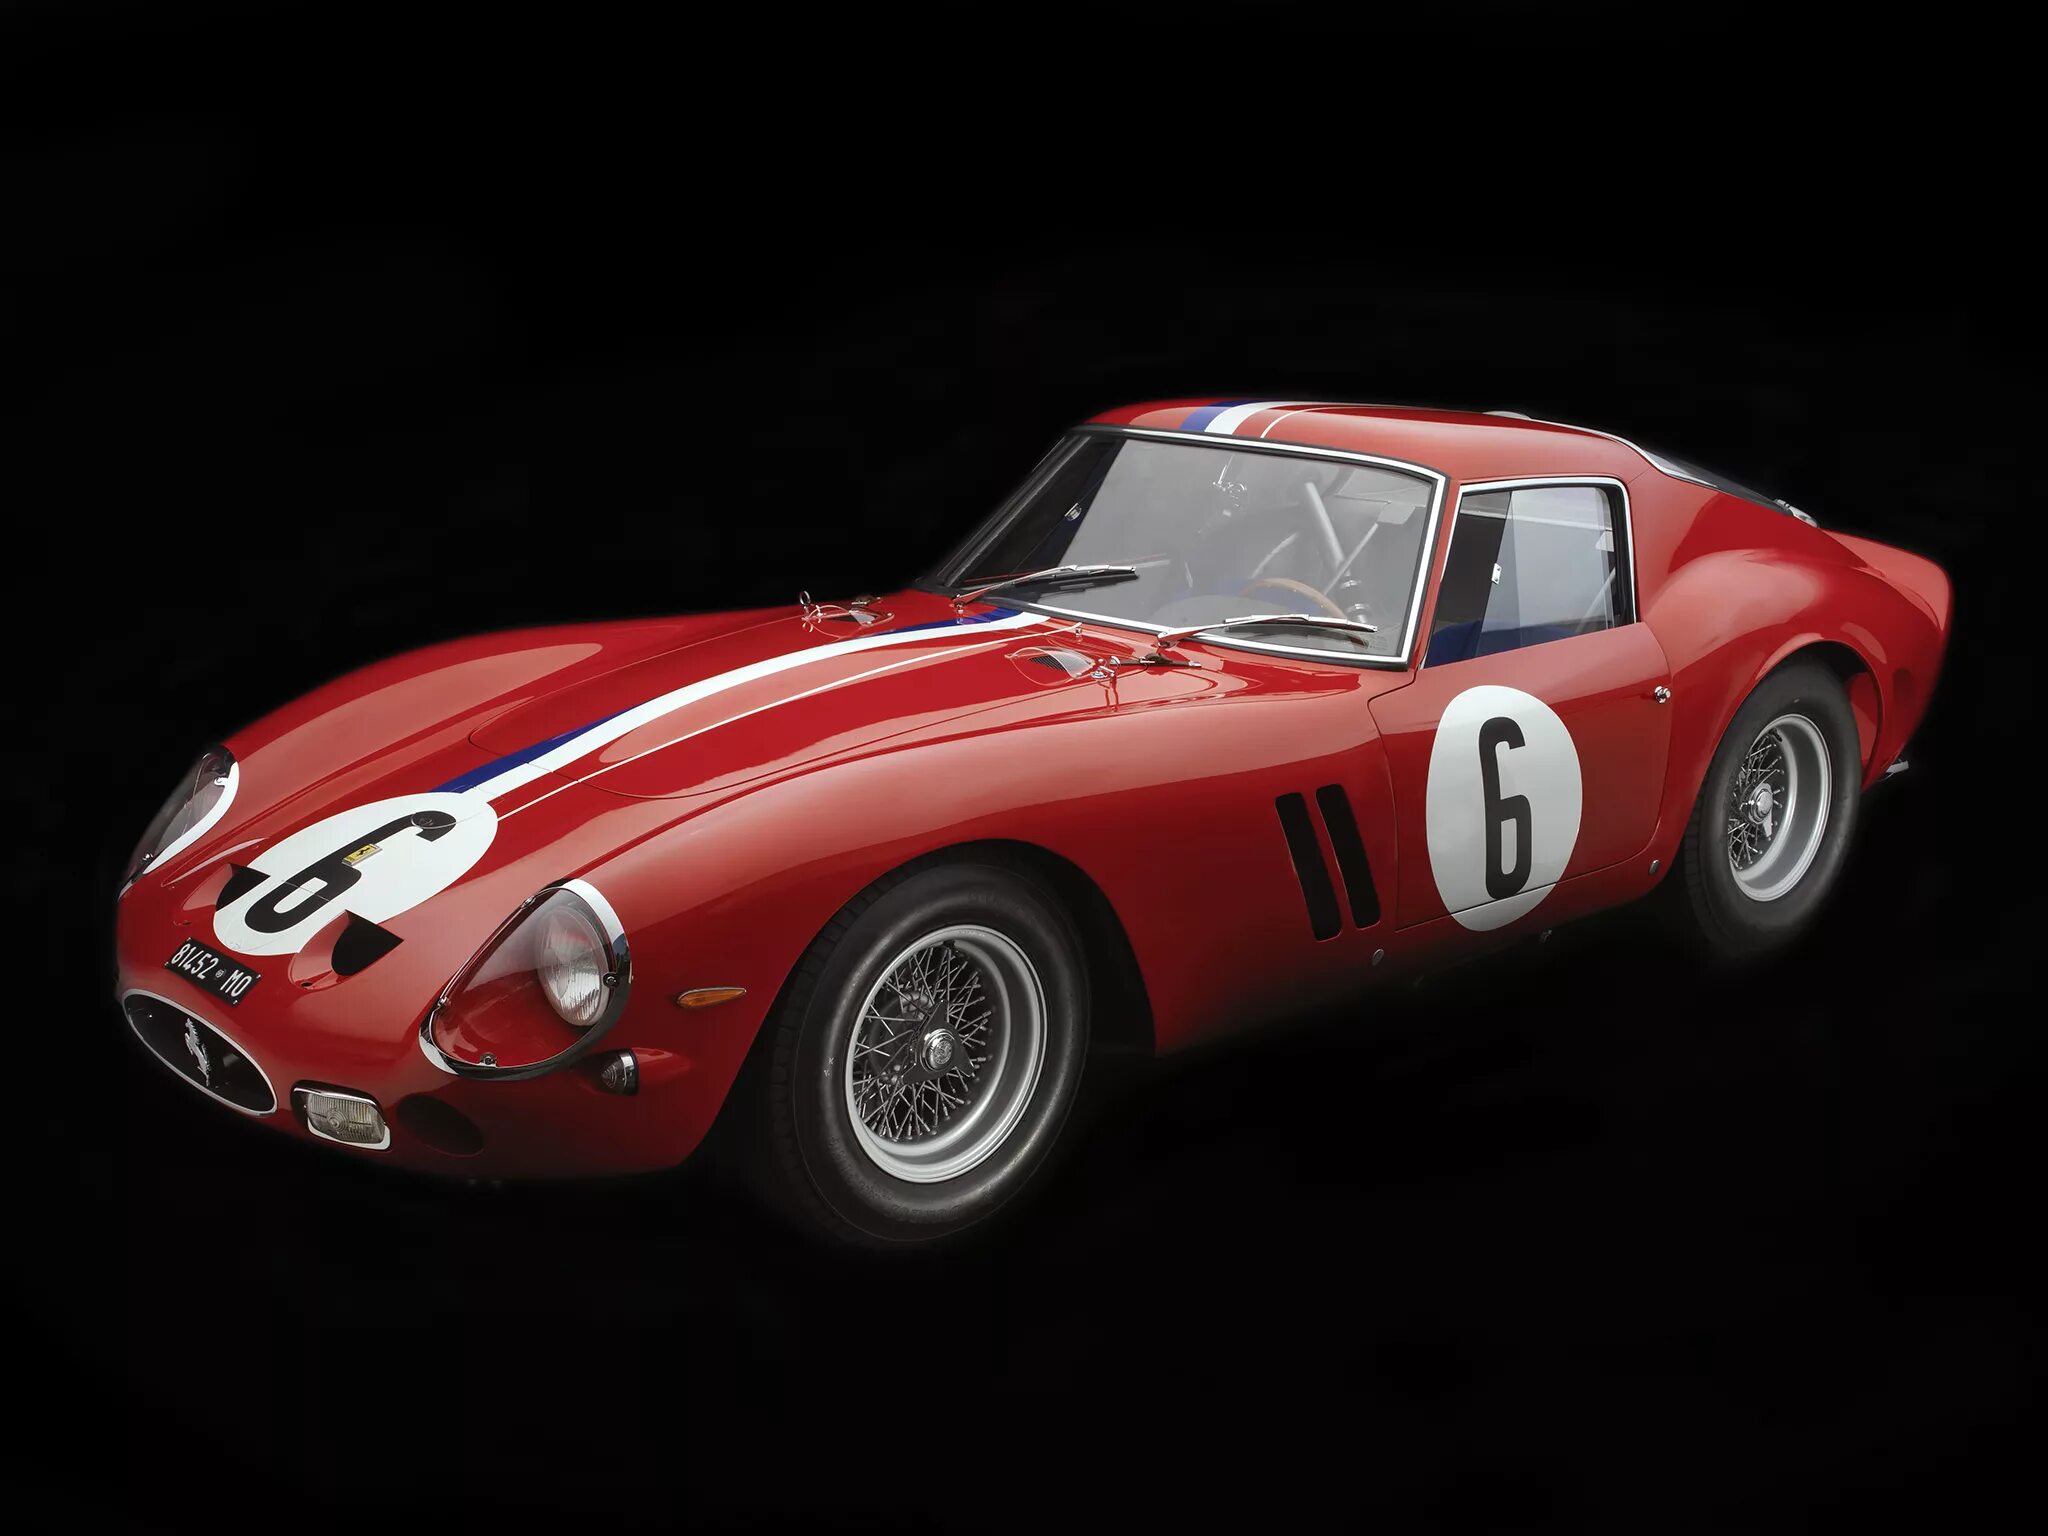 Ferrari gto 1962. Ferrari 250 GTO 1963. Ferrari 250 GTO. 1. Ferrari 250 GTO. Ferrari 250 GTO 1962.